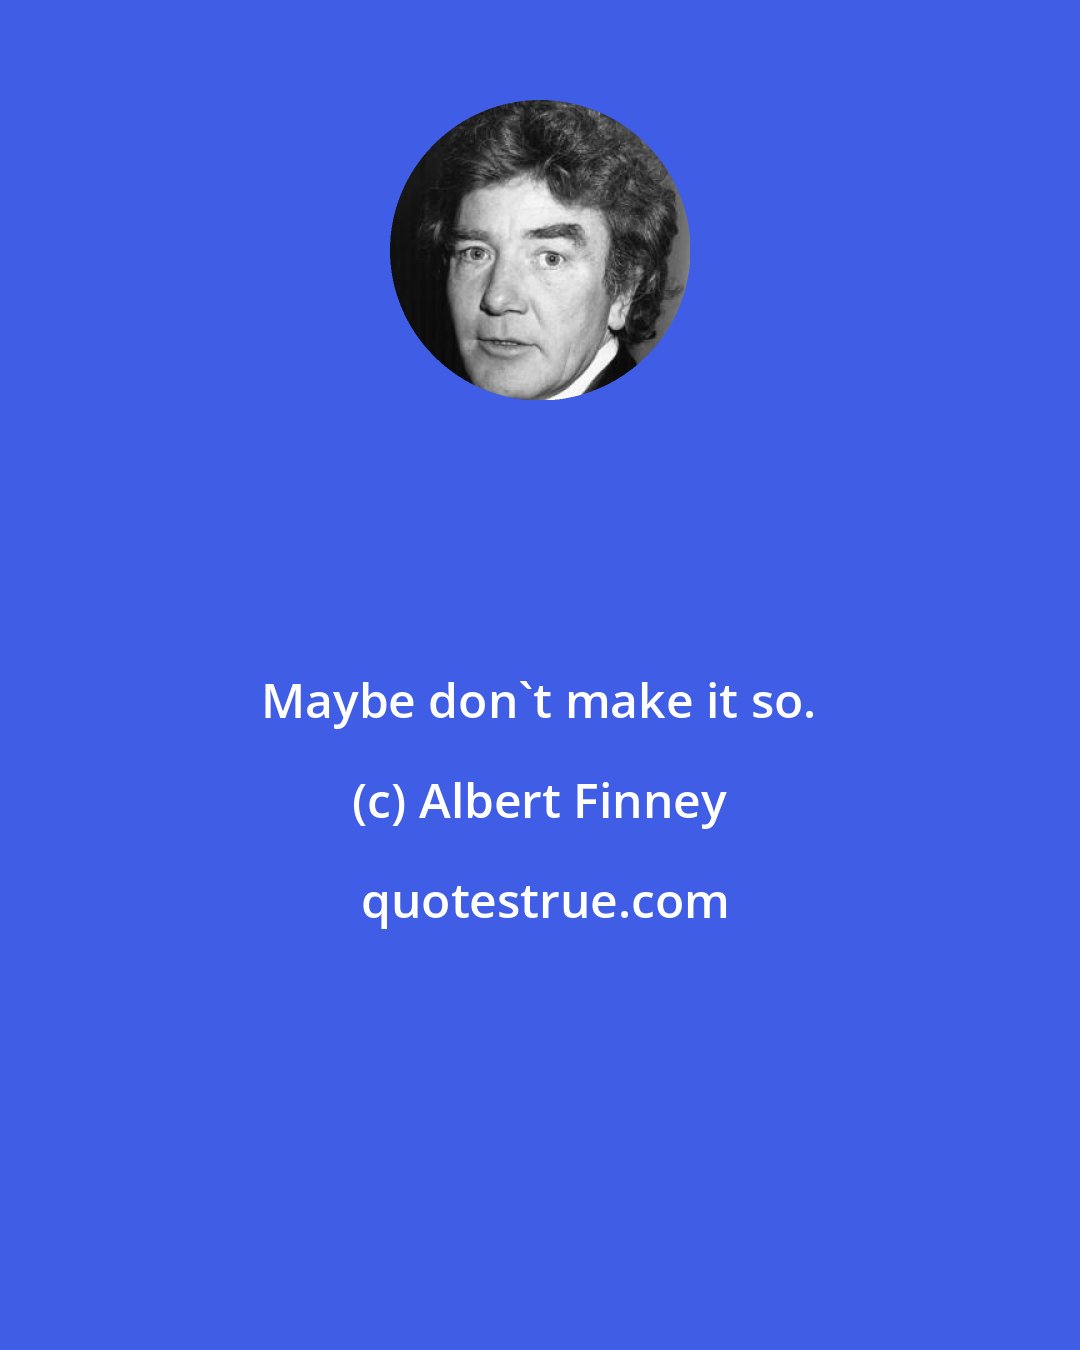 Albert Finney: Maybe don't make it so.